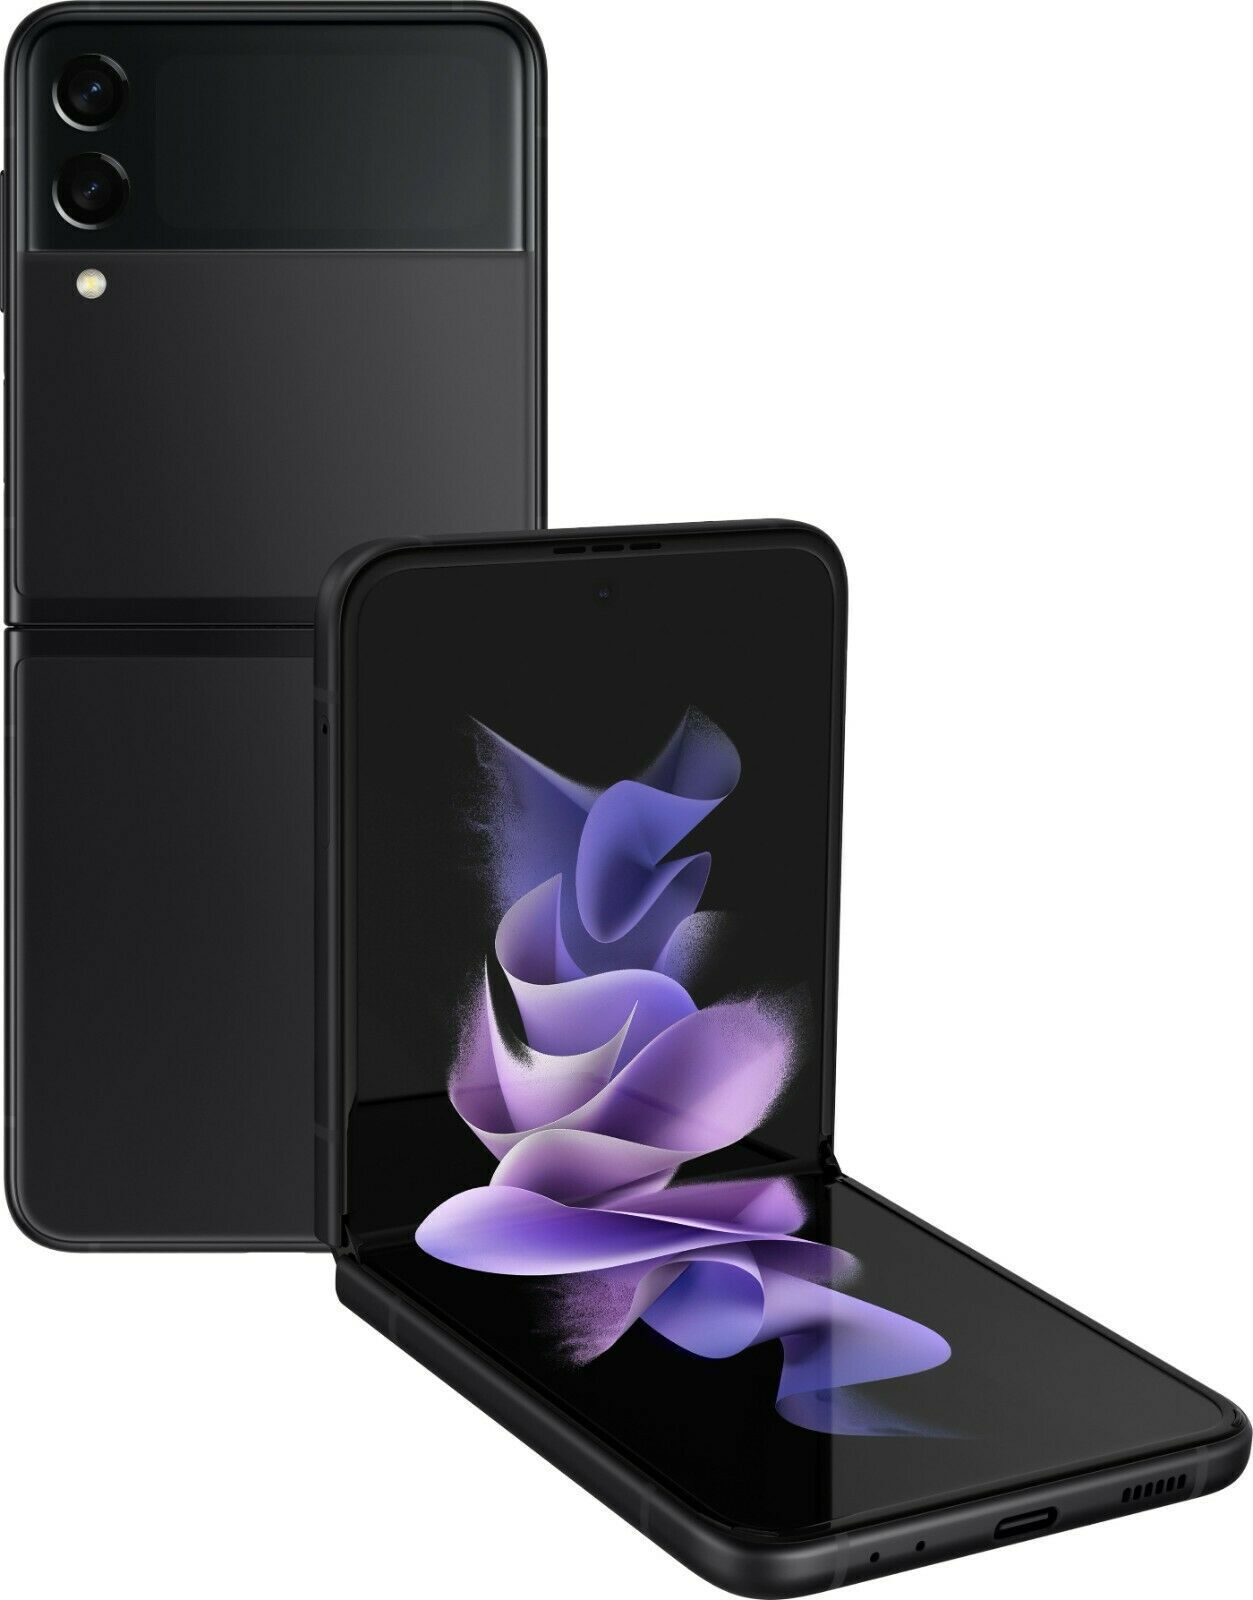 Samsung Galaxy Z Flip 3 5G SM-F711U1 128GB Black (US Model) - Factory Unlocked Cell Phone - Very Good Condition - image 3 of 3